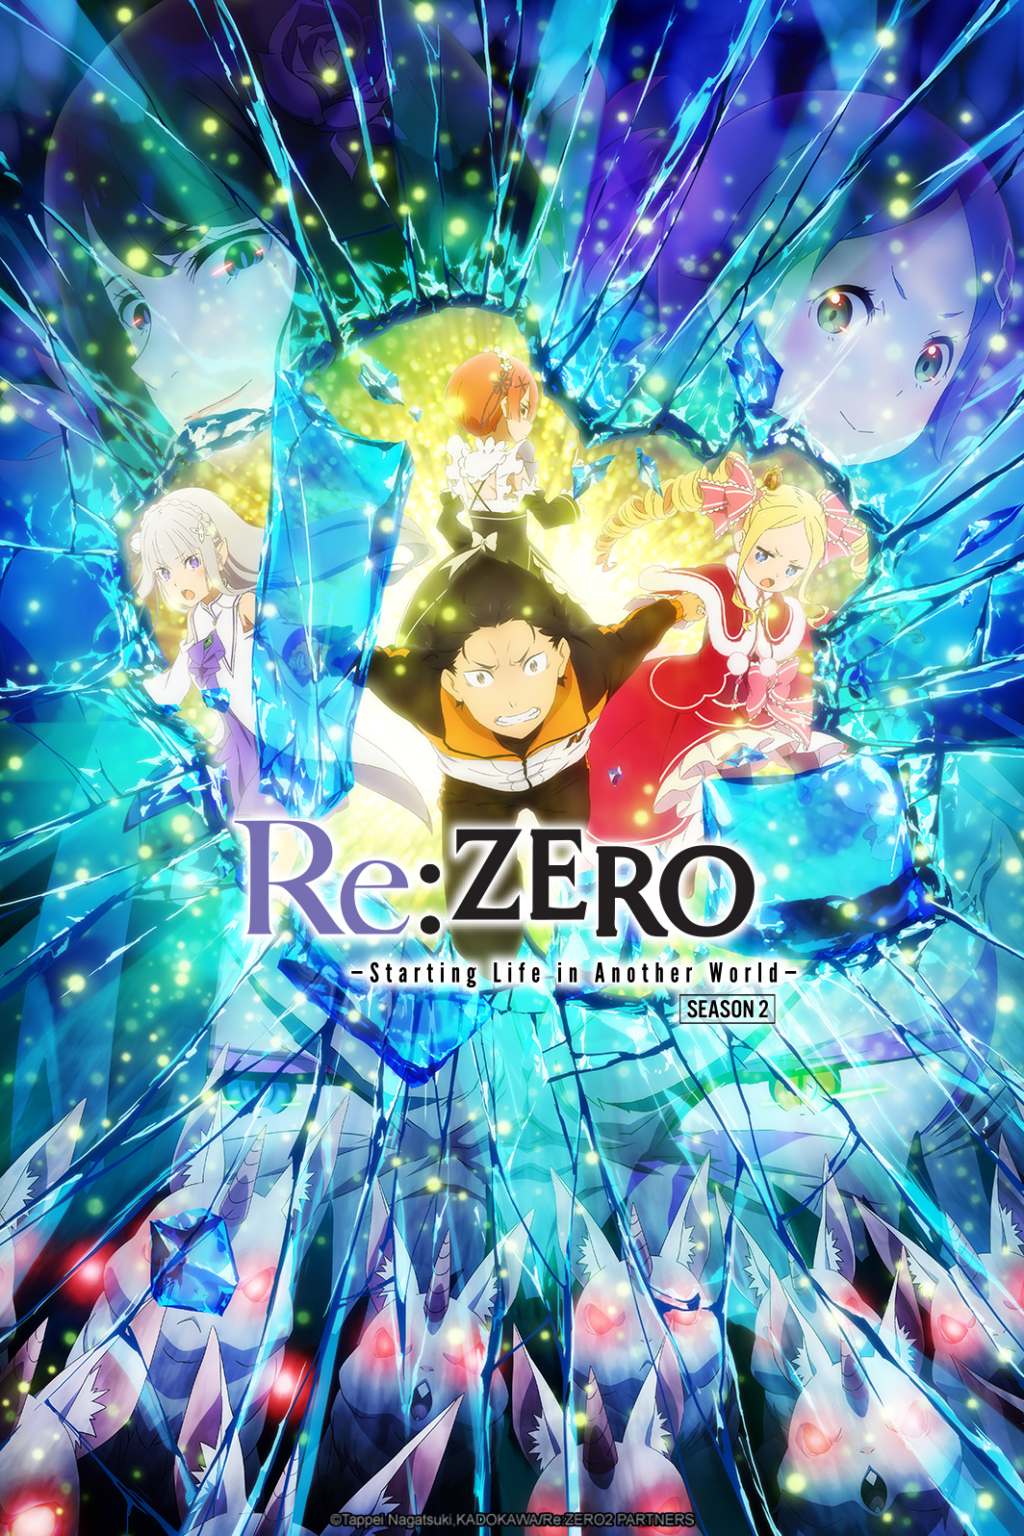 Funimation to simulcast Log Horizon Season 3, Mushoku Tensei, Otherside  Picnic & More Anime including Simuldubs for Dr. STONE Stone Wars & Slime  Season 2 this Winter 2021 • Anime UK News